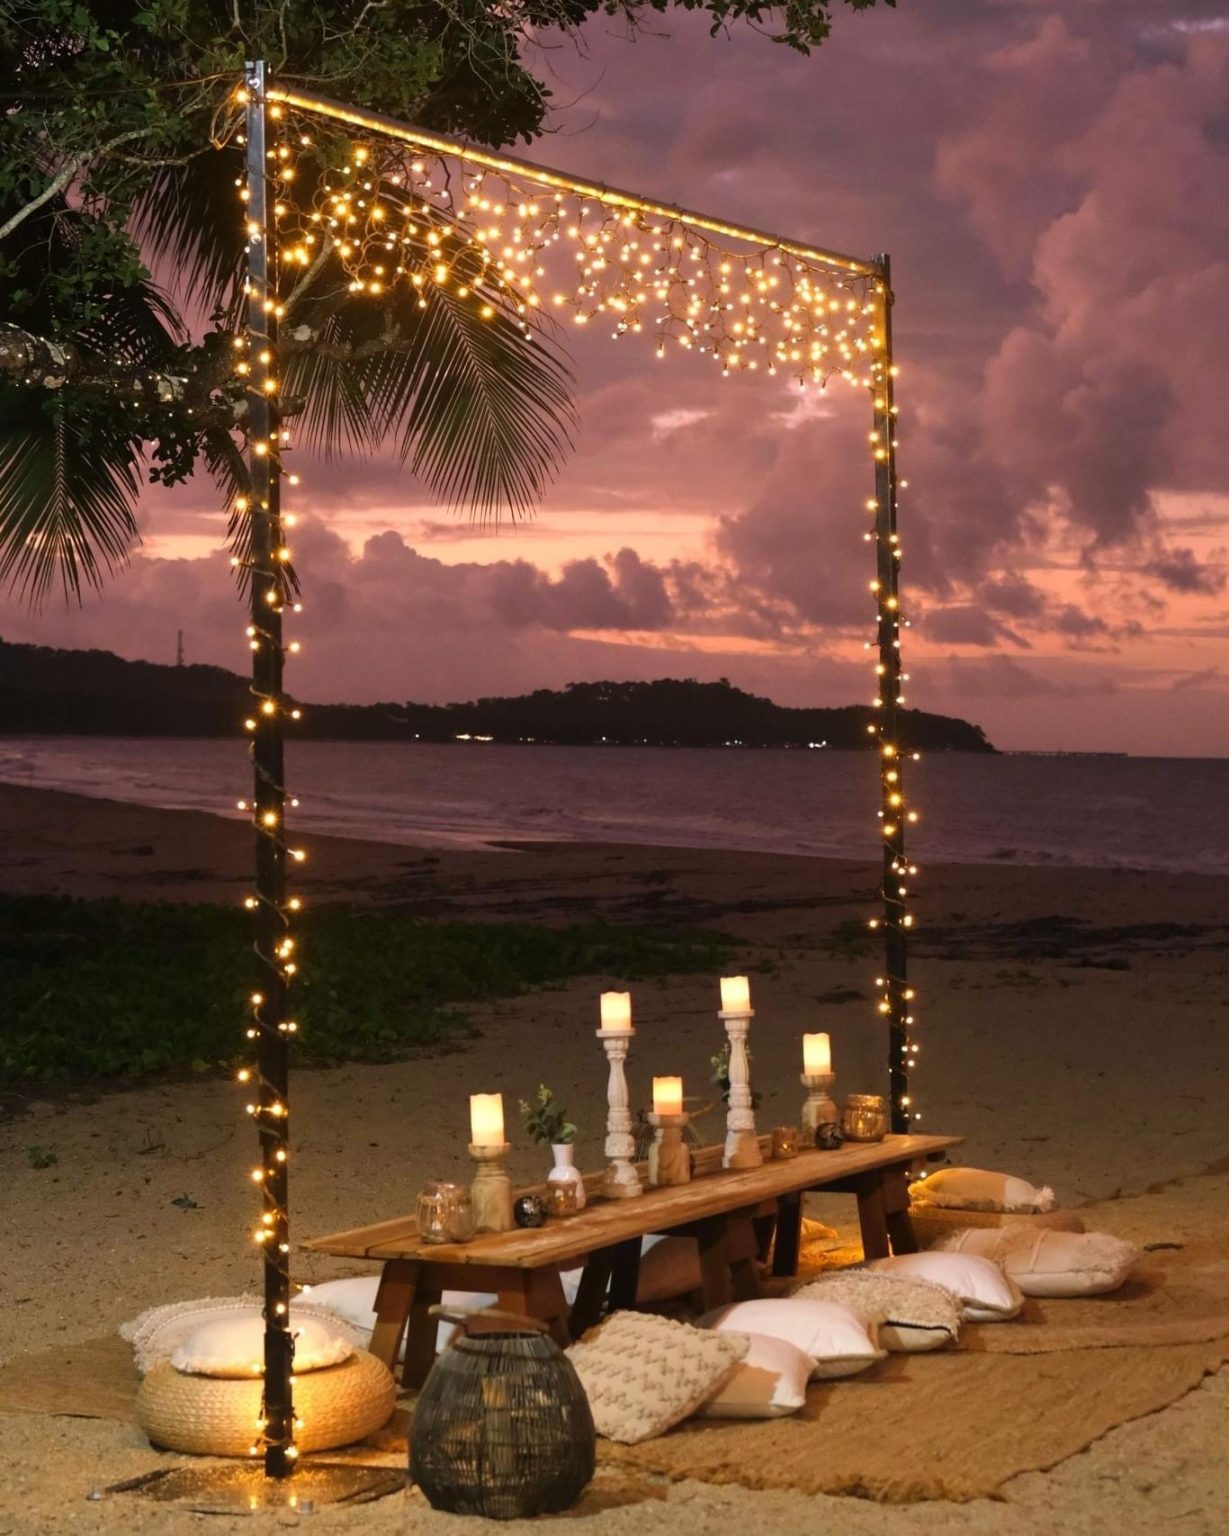 Melaleuca Resort - Palm cove weddings - beautiful beach picnic set up on the beach with fairy lights